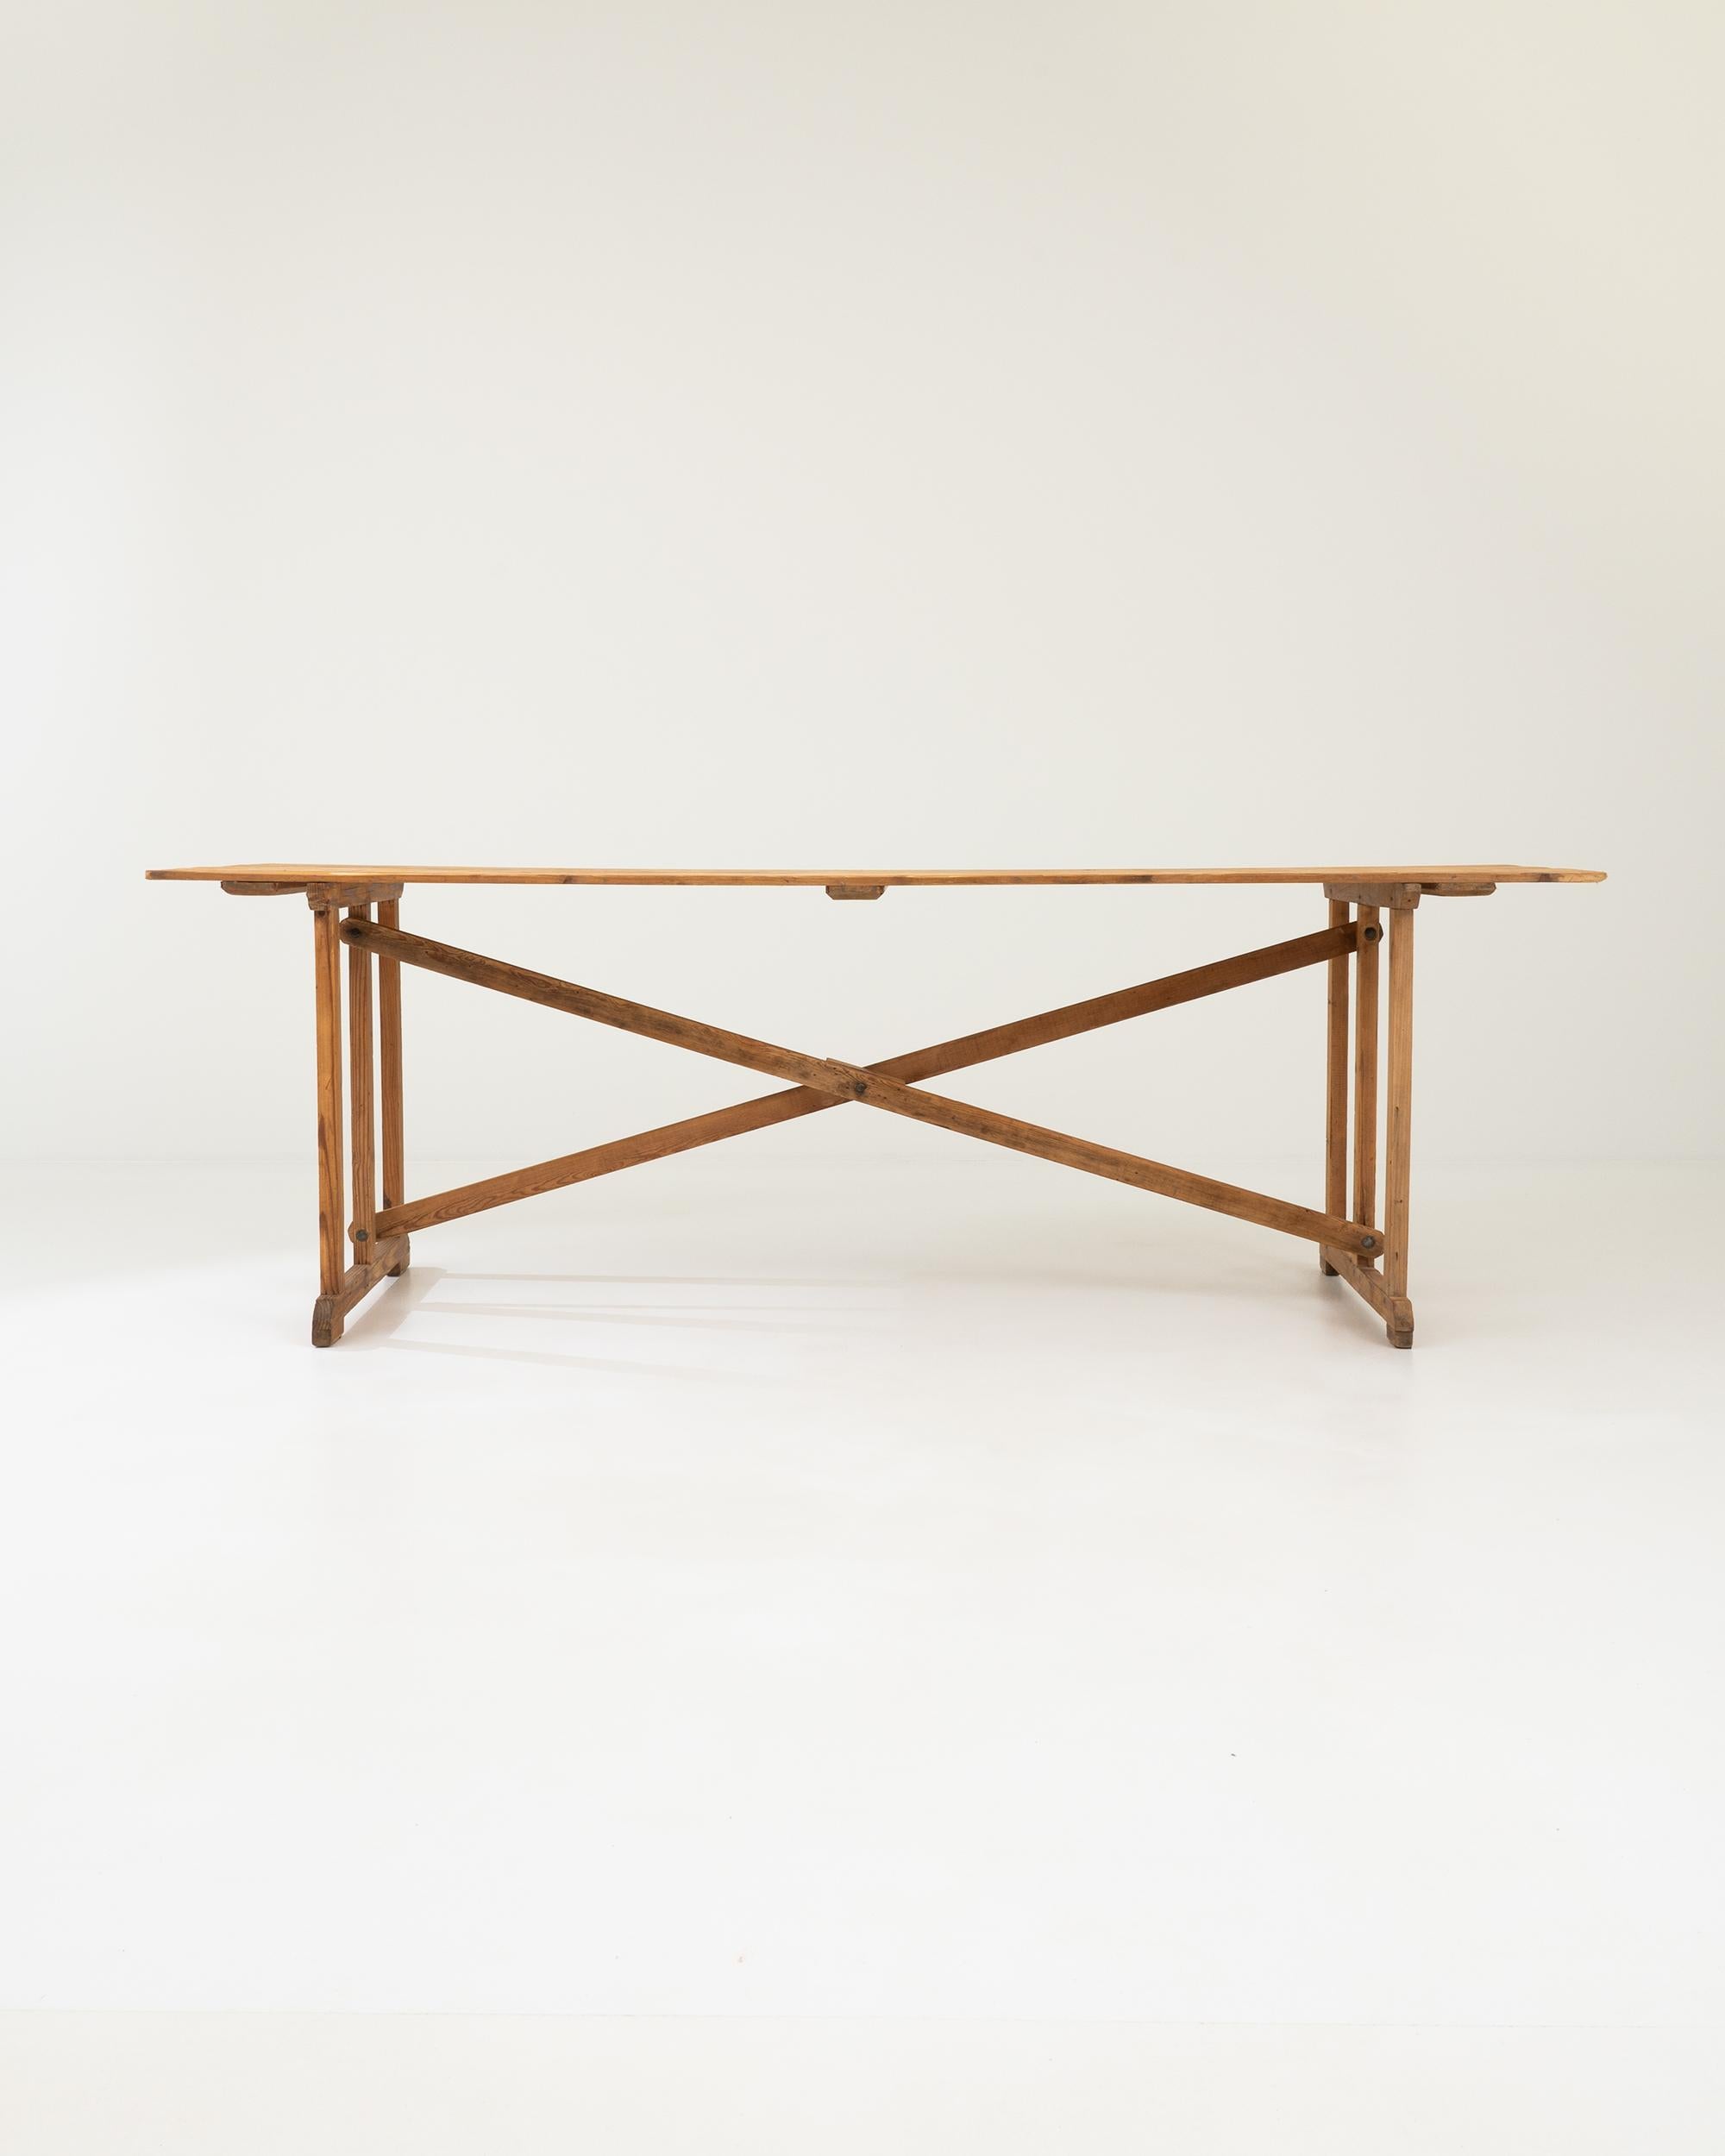 Rustic Vintage Belgian Wooden Table For Sale